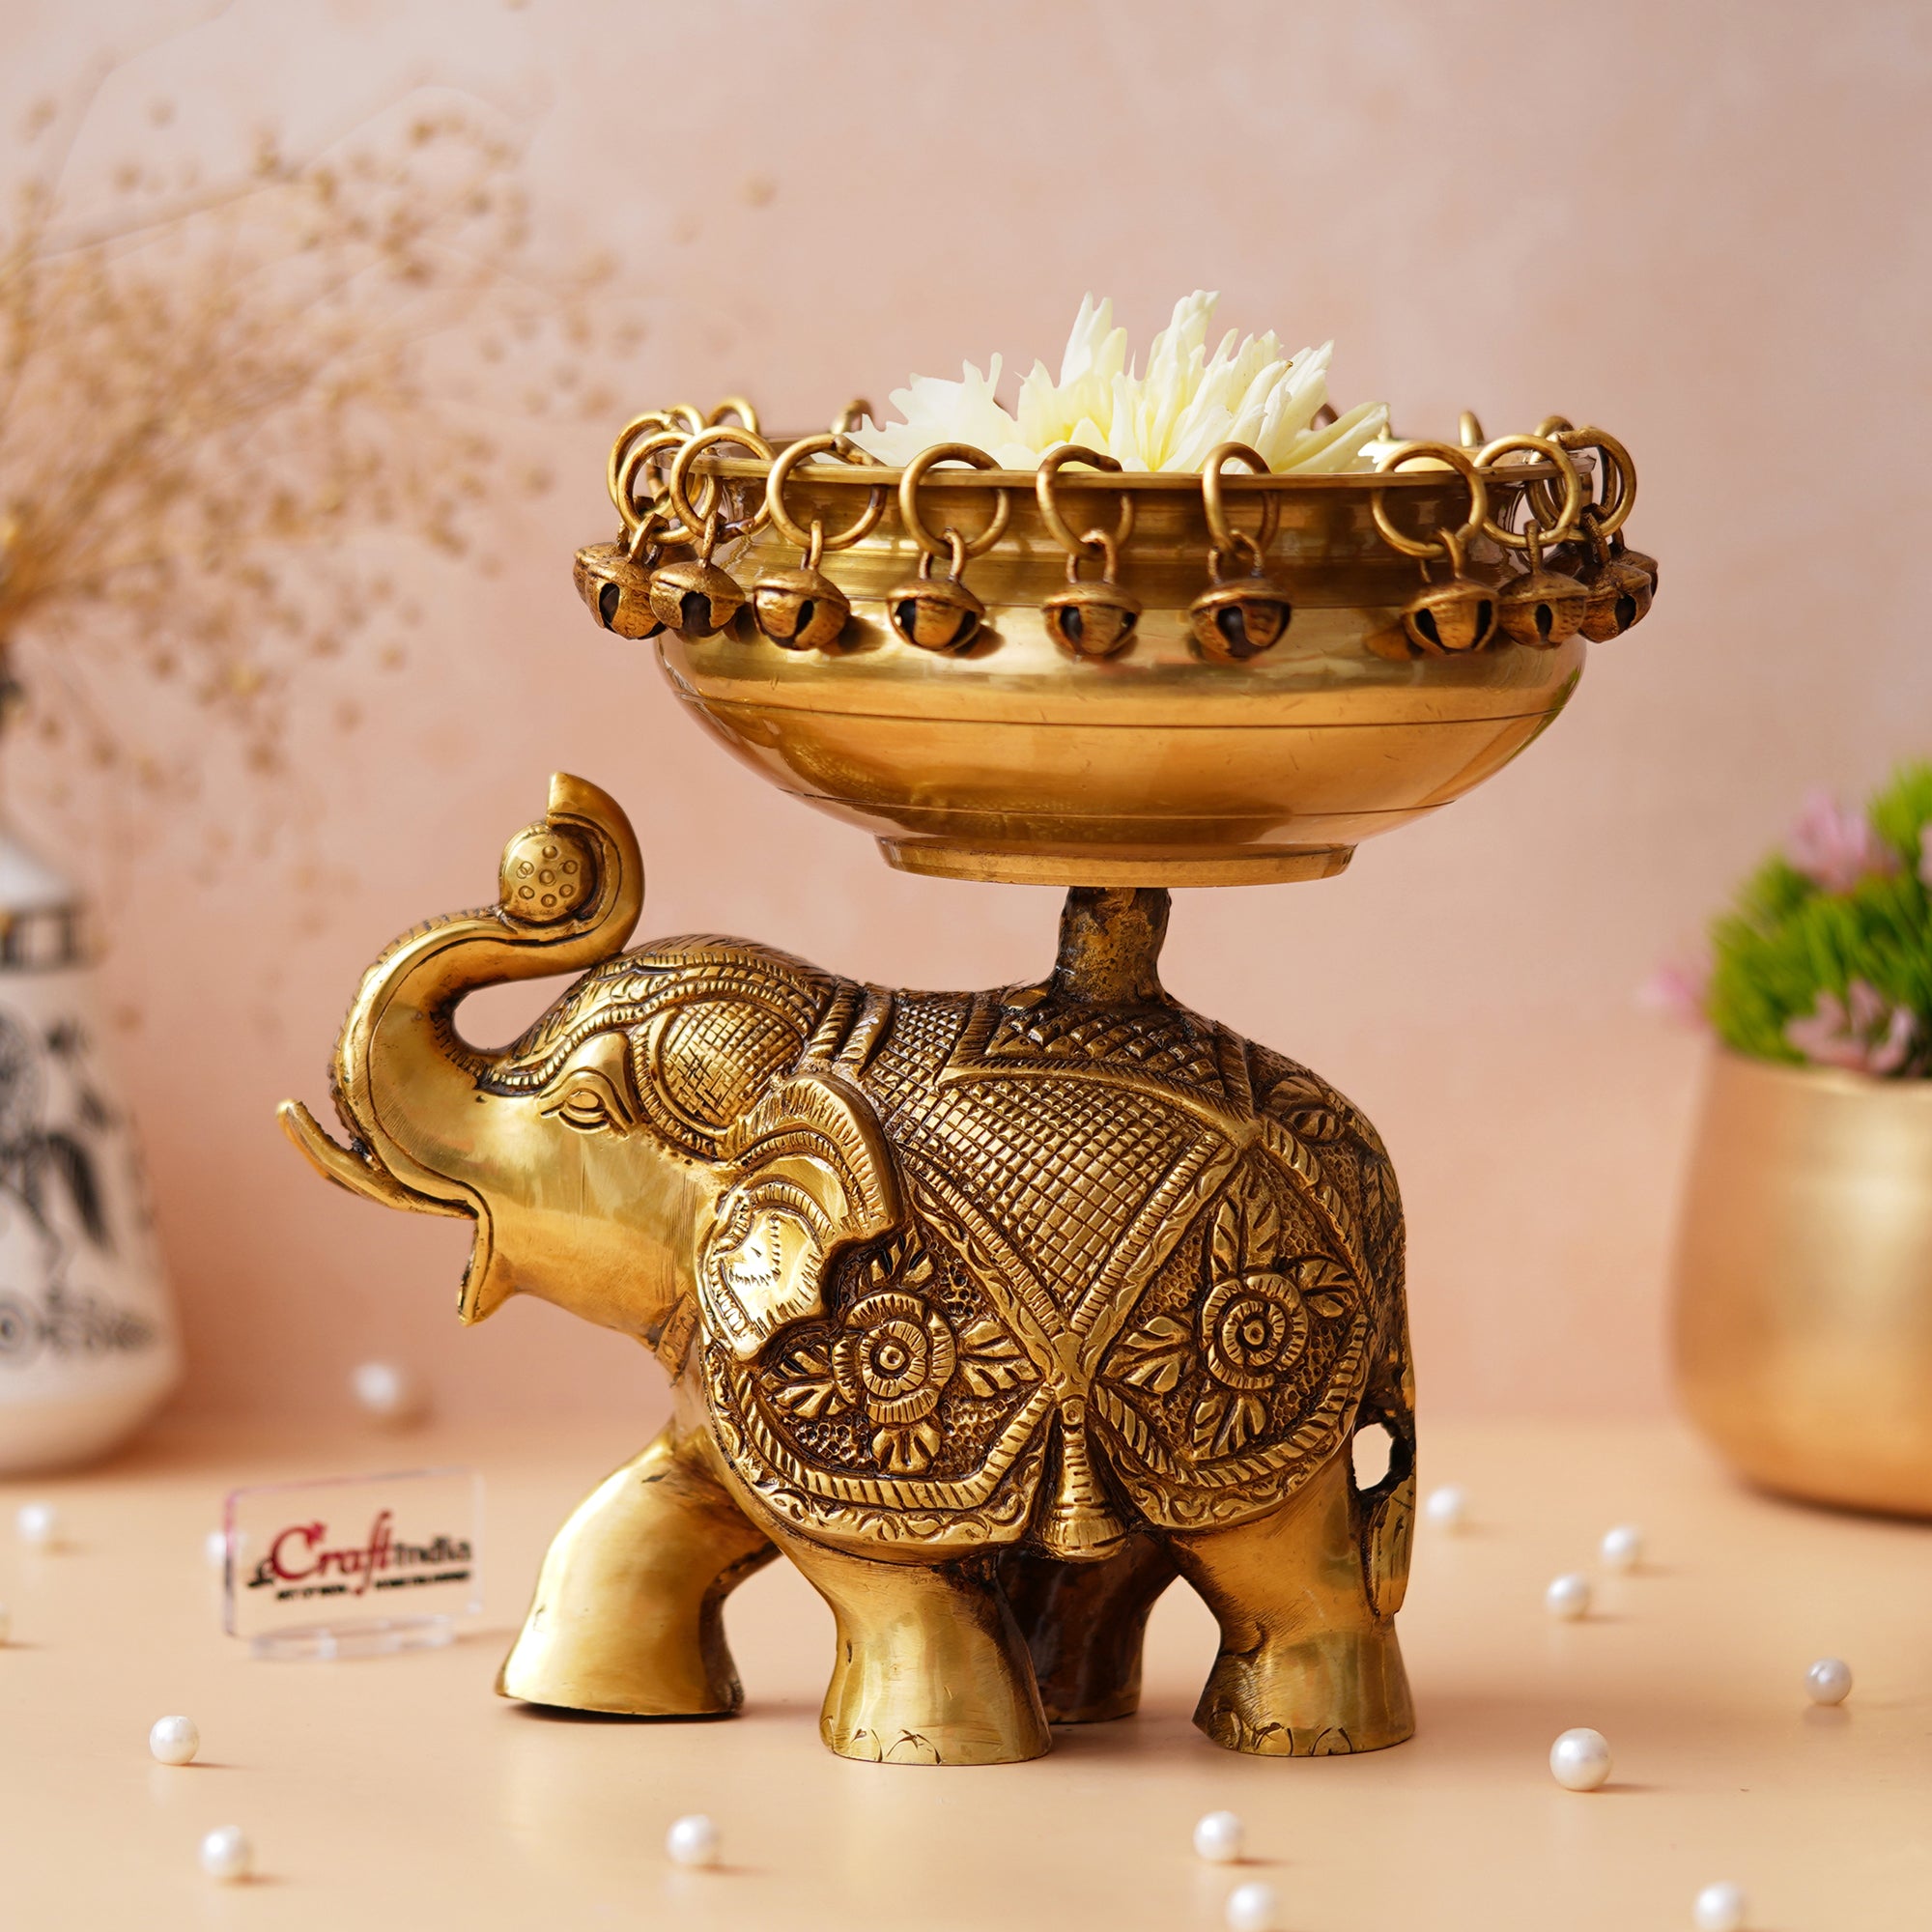 Golden Brass Urli on Elephant Statue with Bells for Floating Flowers - Ethnic Design Decorative Showpiece for Home & Office Decor, Diwali Decoration - Gift for Housewarming, Navratri Festival